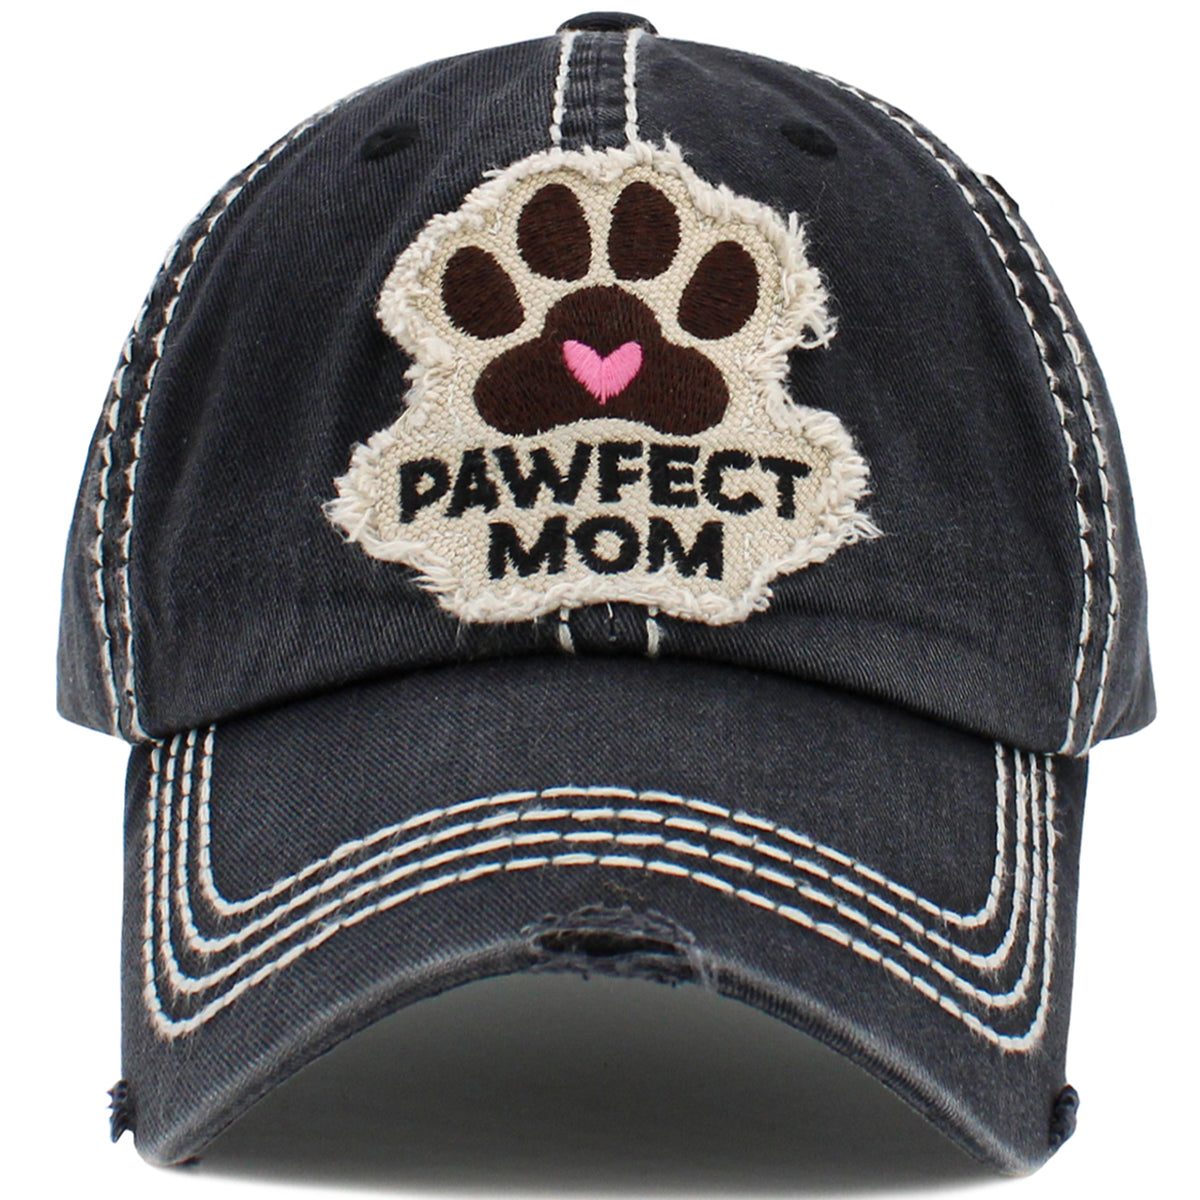 1474 - Pawfect Mom Hat